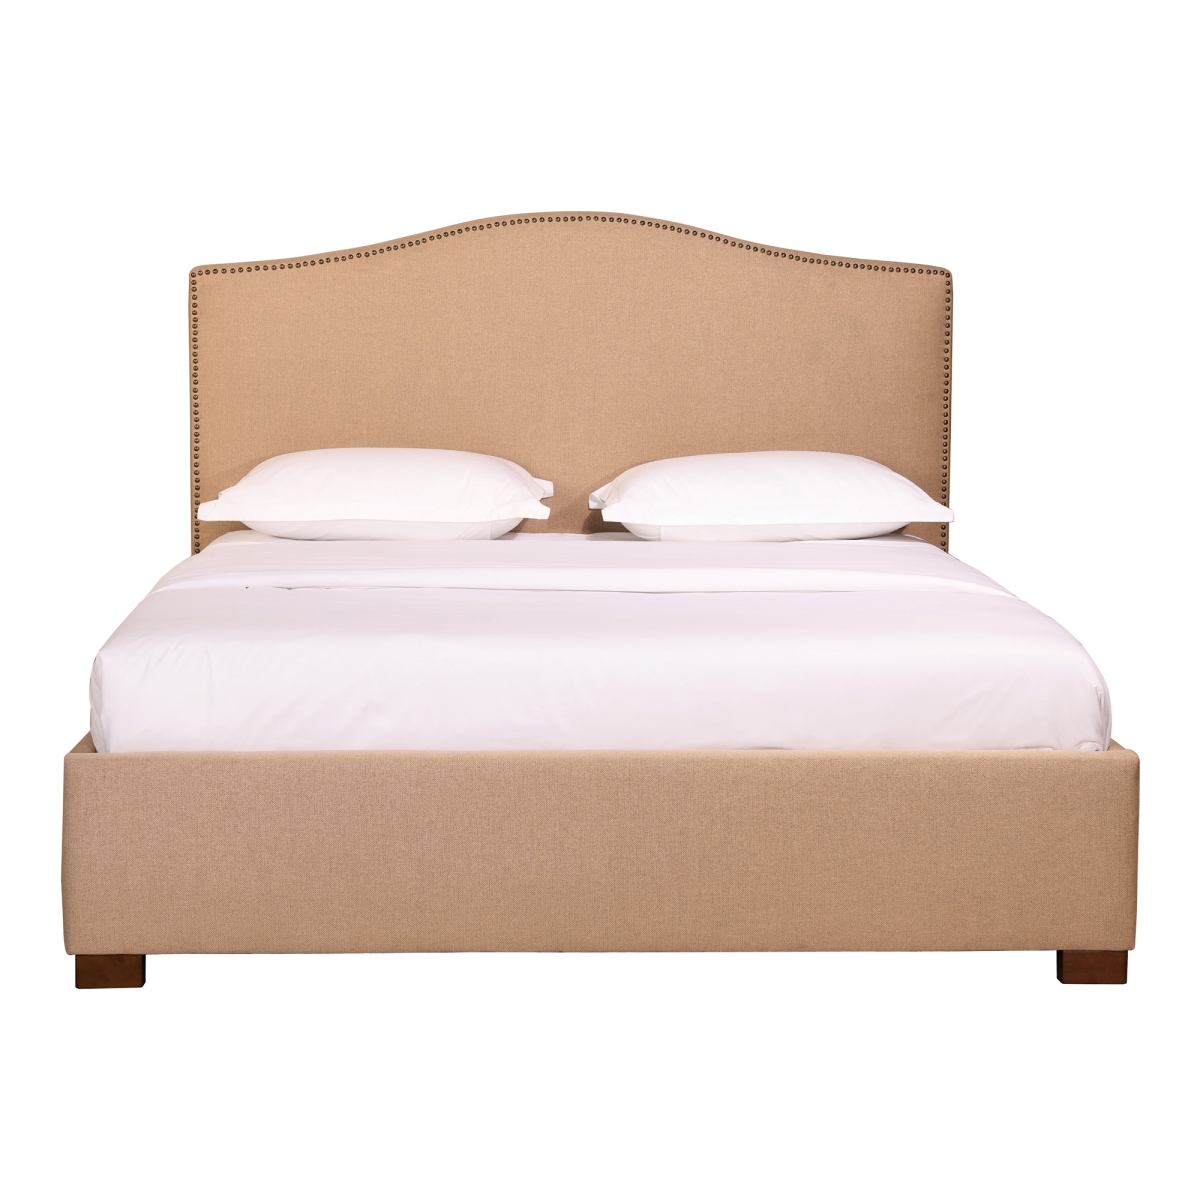 Rn-1137-34 Zale Queen Size Bed, Oatmeal - 47 X 65 X 86 In.